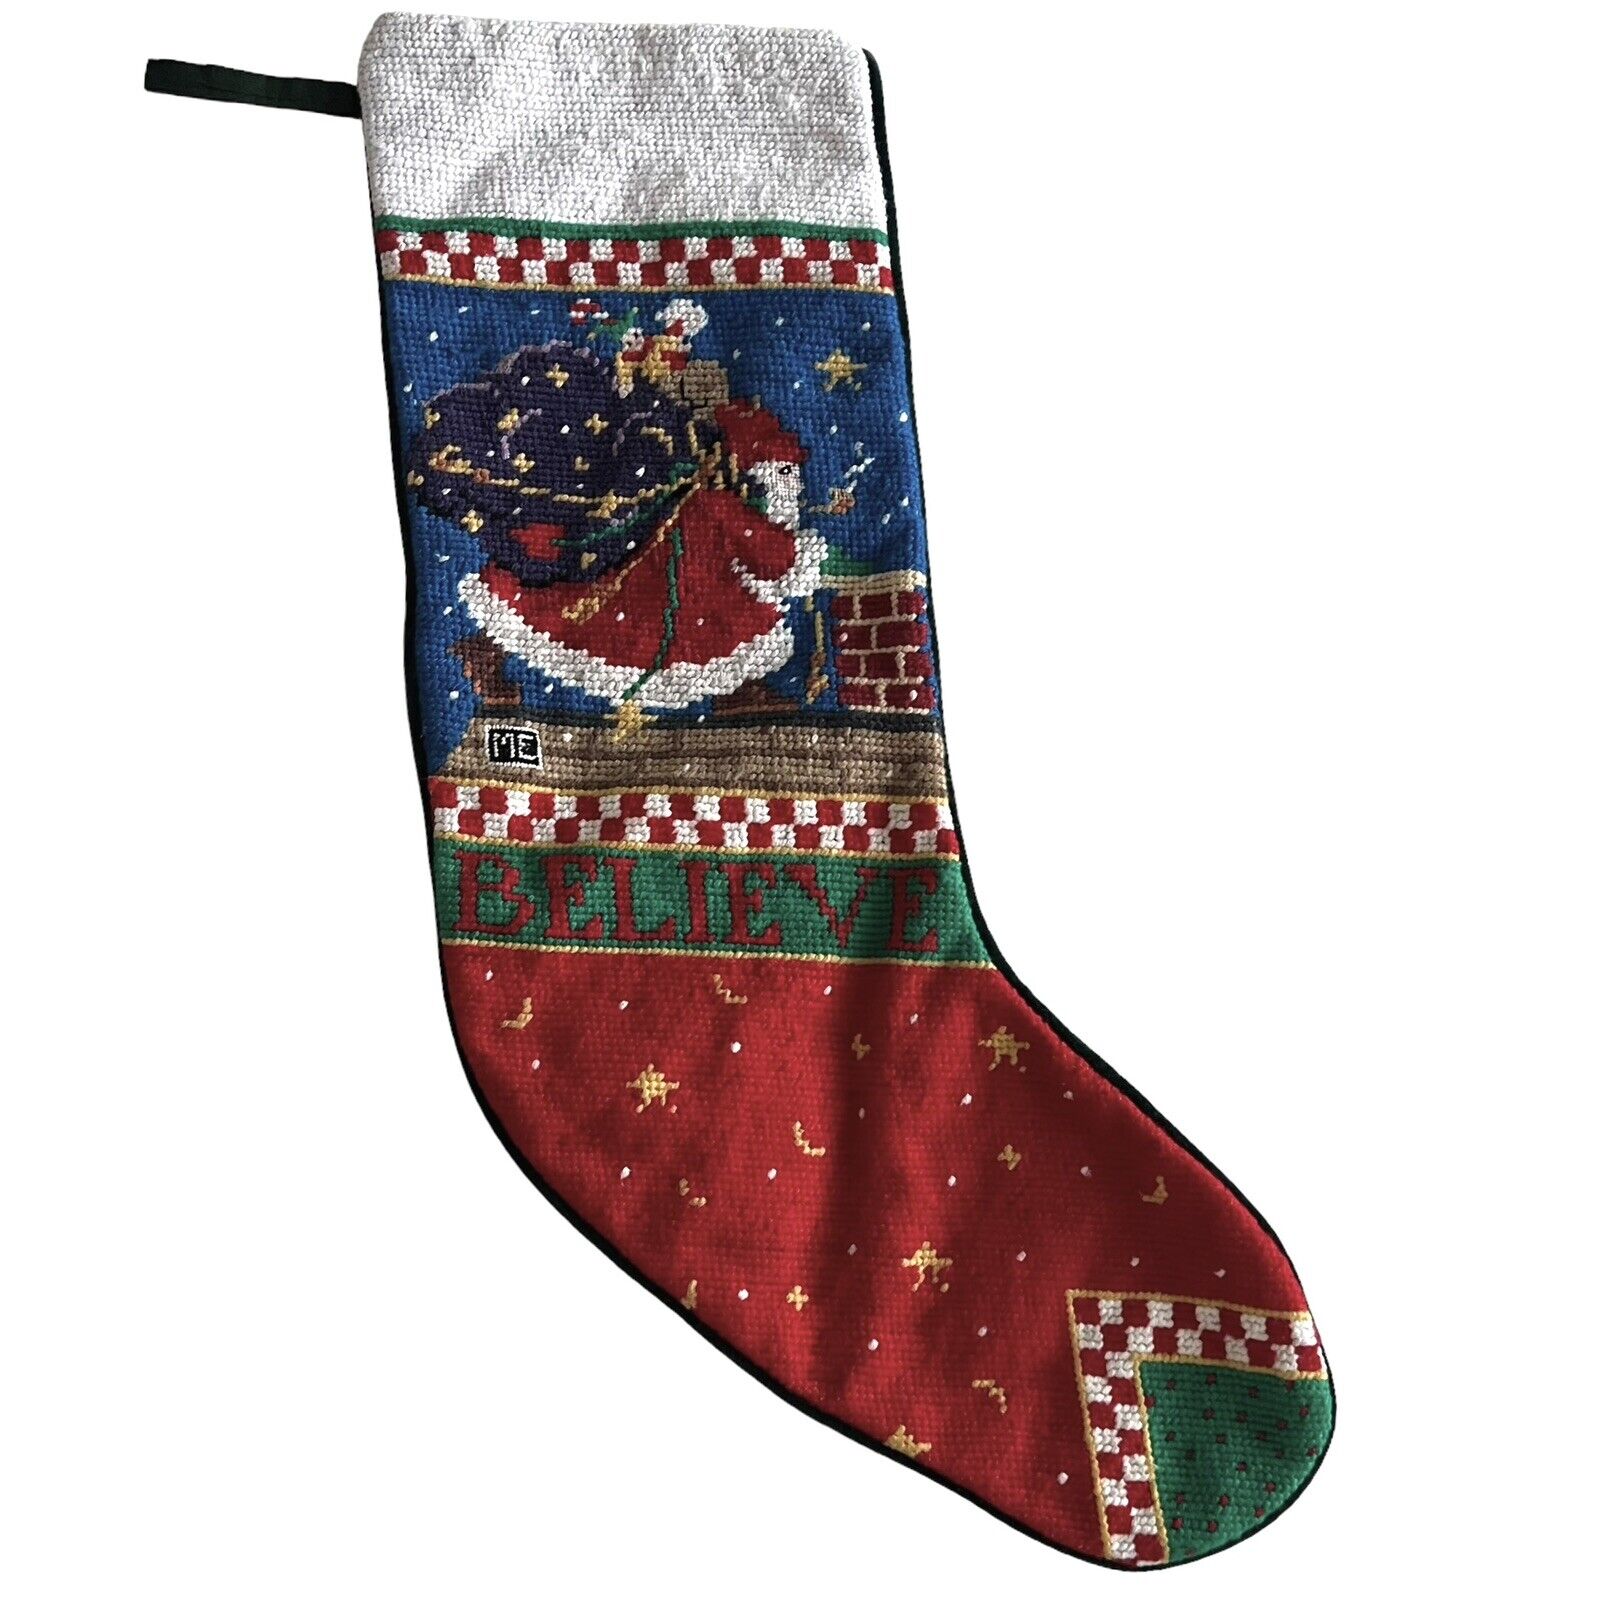 Vintage Mary Engelbreit Needlepoint Christmas Stocking BELIEVE Santa Claus